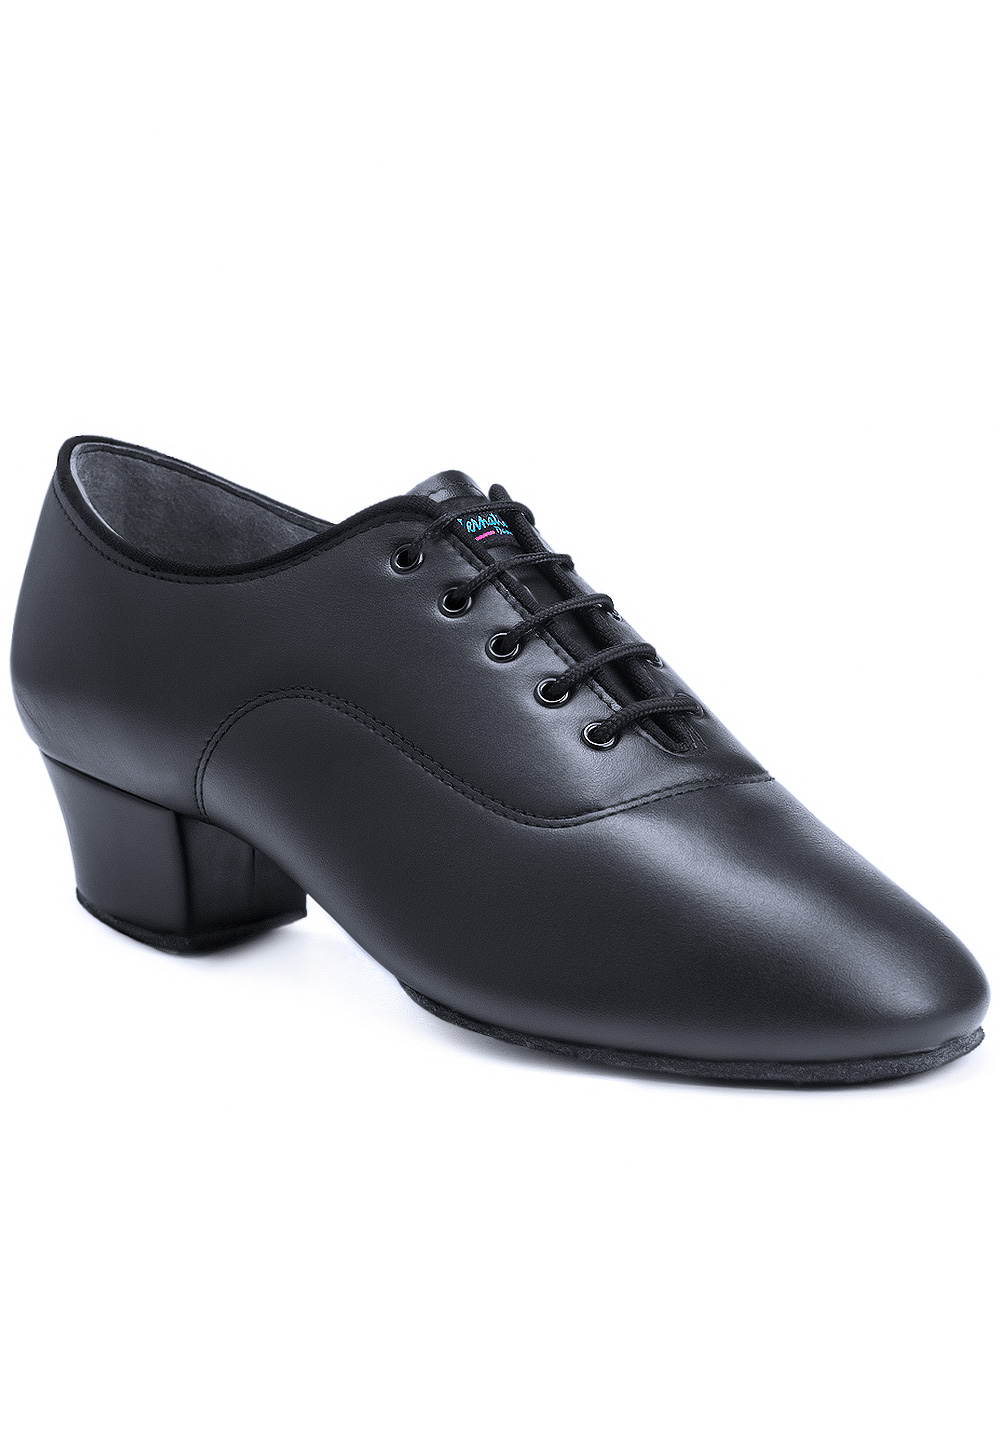 Very Fine Womens Salsa Ballroom Tango Latin Dance Shoes Style CD2808 Bundle with Plastic Dance Shoe Heel Protectors Tan Satin 9.5 M US Heel 2.5 Inch